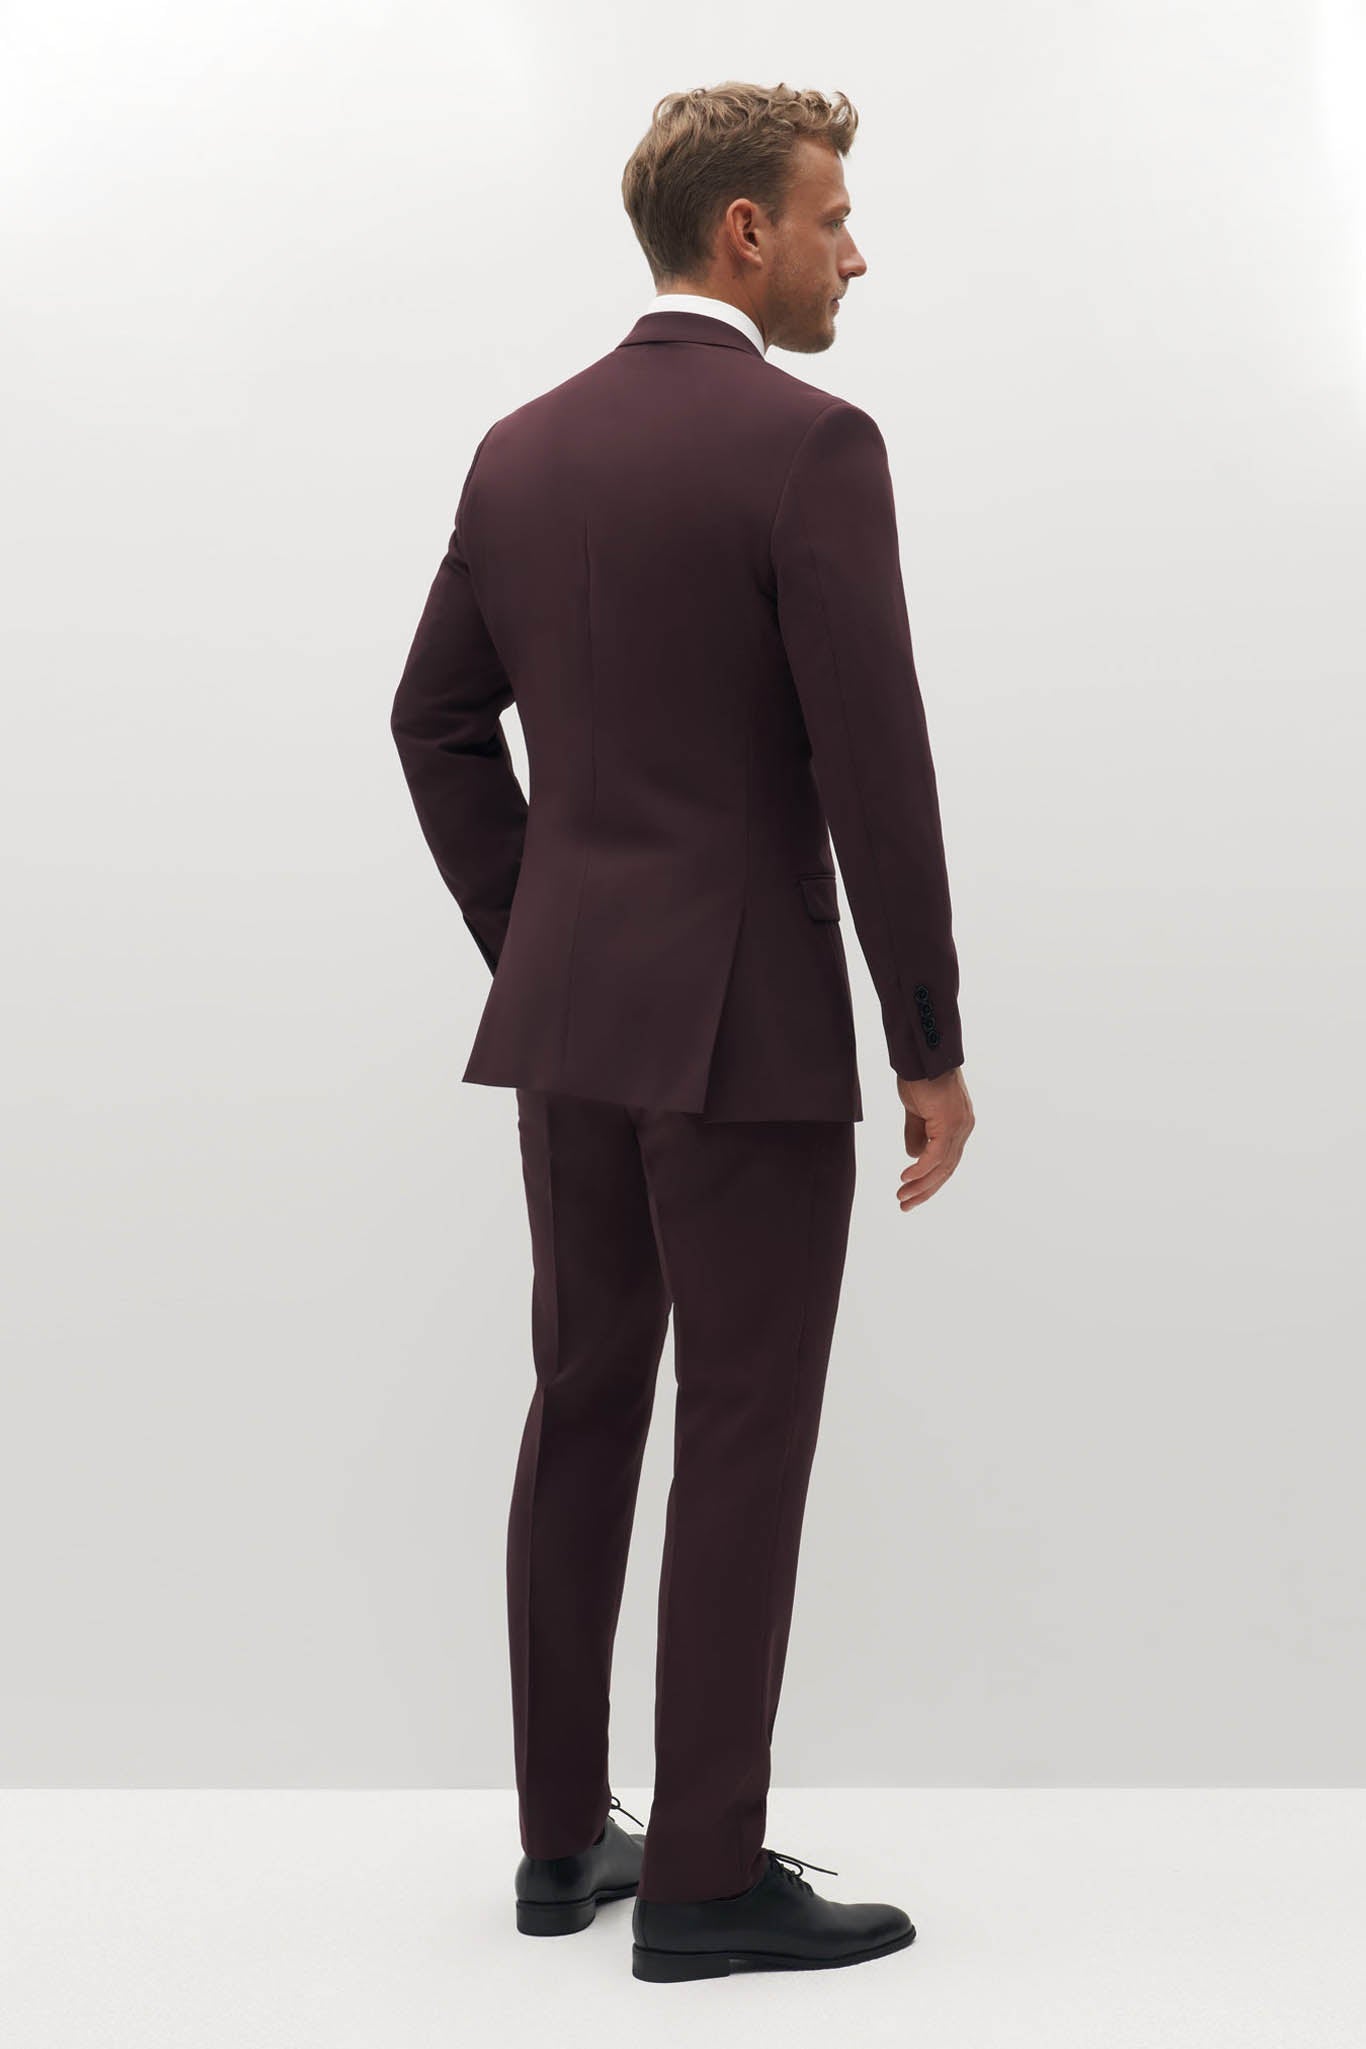 Burgundy Suit Jacket by SuitShop